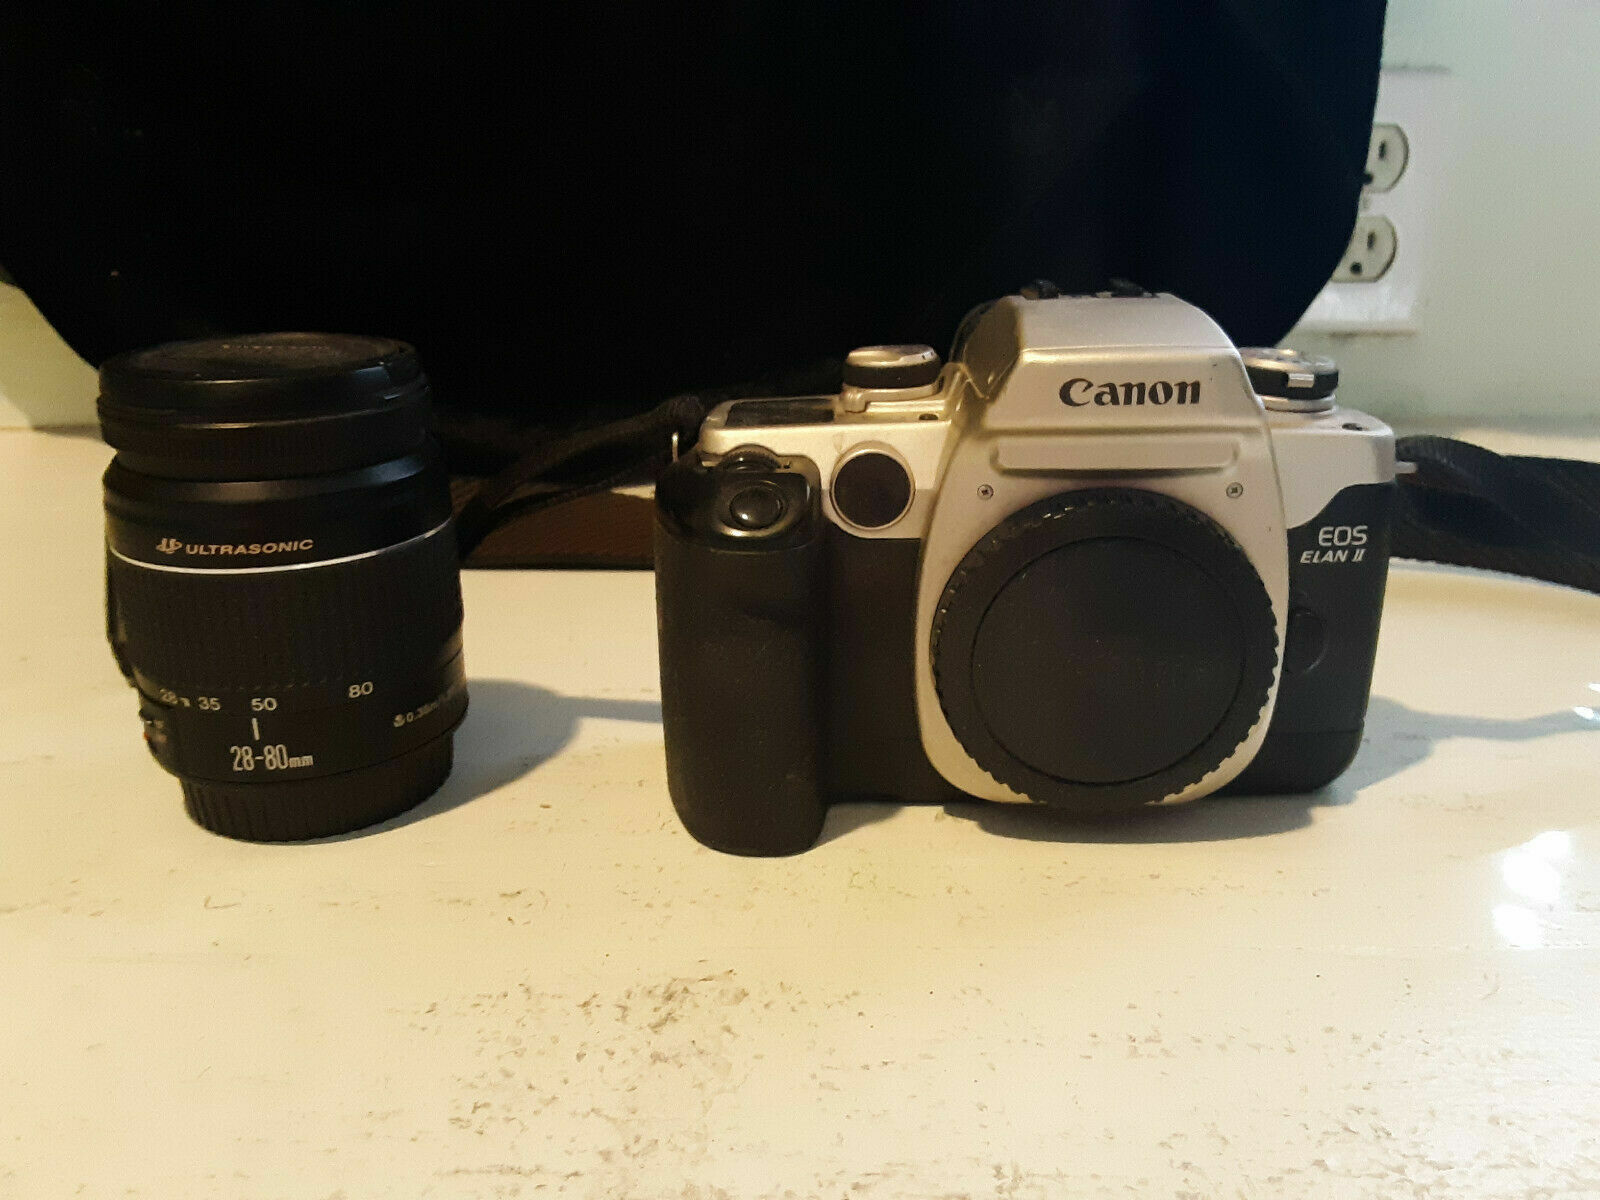 Canon EOS ELAN II  35mm SLR Camera Kit w/ 28-80mm Lens (Discontinued) - $150.00